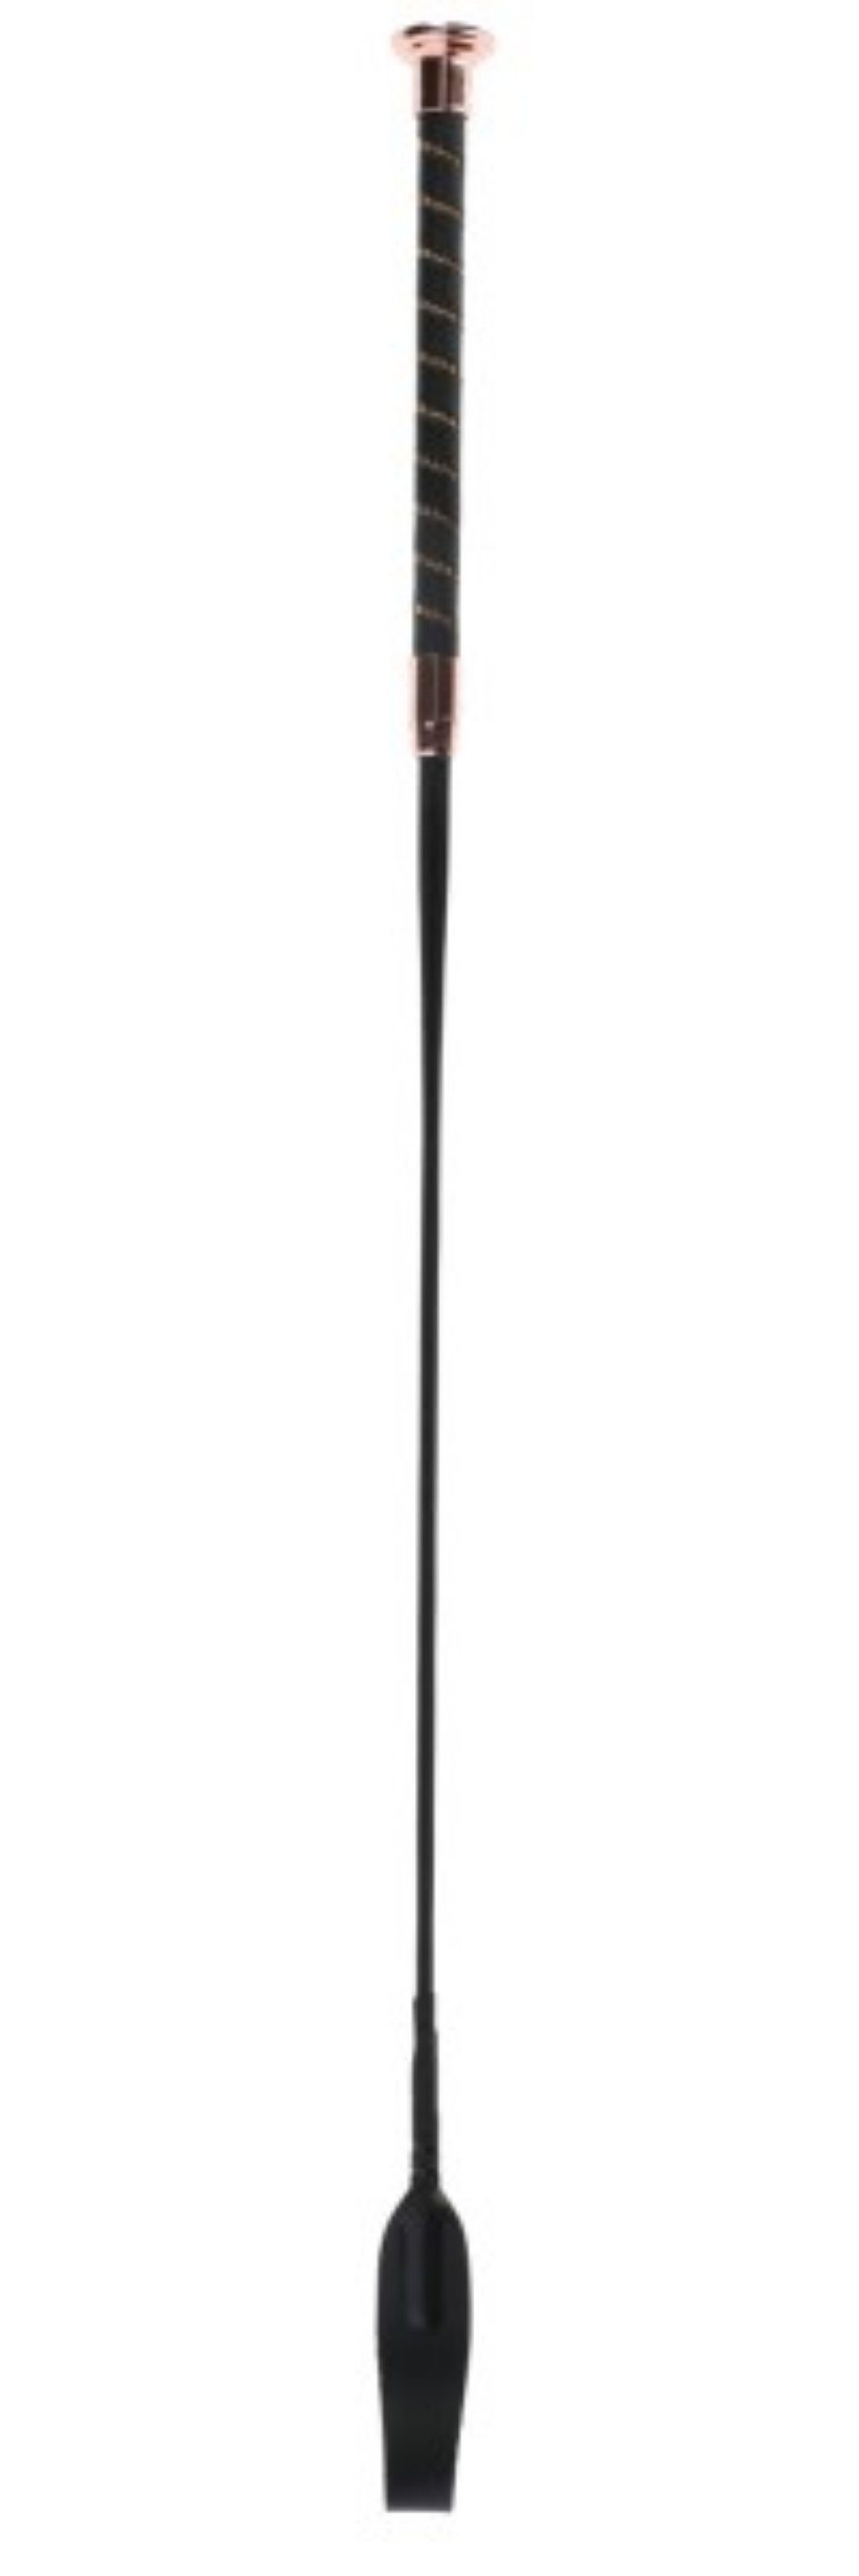 Kerbl Springgerte Springgerte mit Klatsche 65 cm 3226282, 1-tlg.